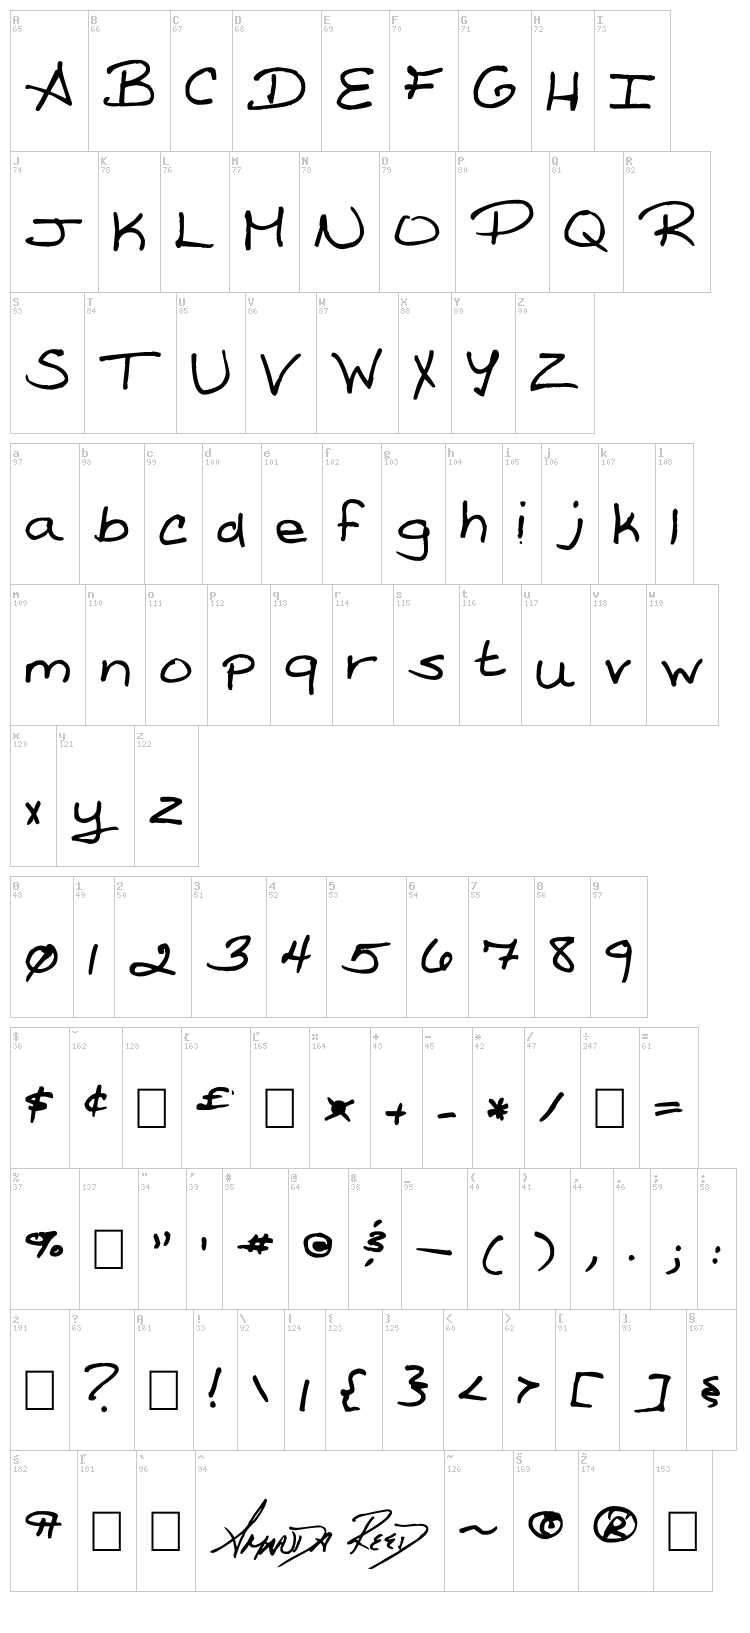 Amanda Reed's Font font map